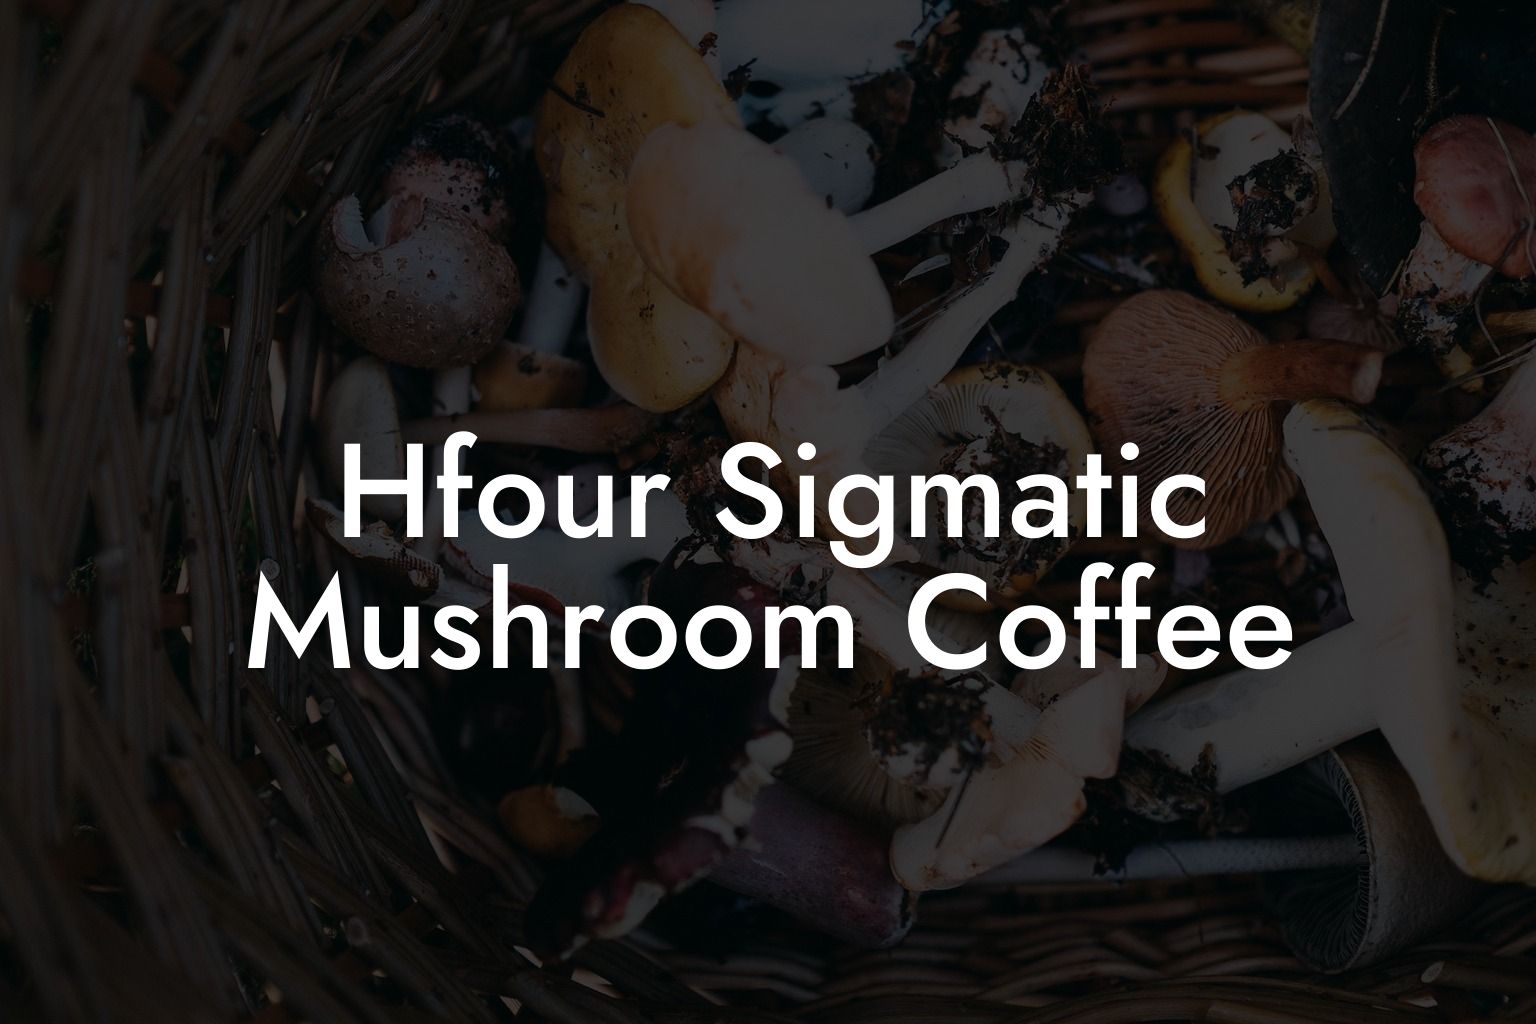 Hfour Sigmatic Mushroom Coffee